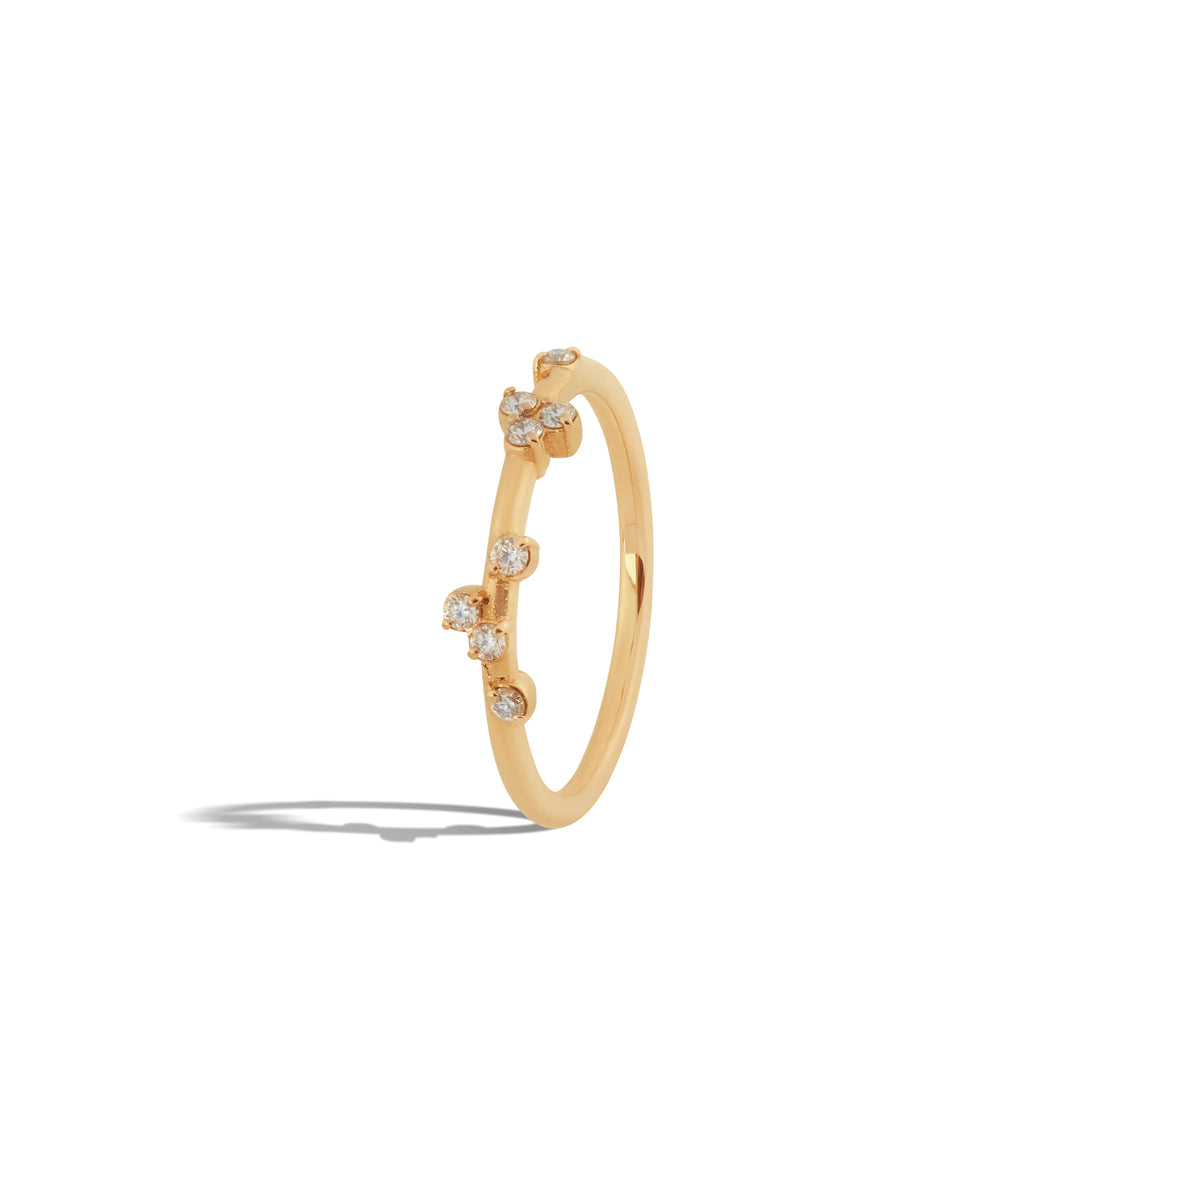 Henri Daussi Engagement Rings Under $5000 | Henri daussi engagement rings,  Engagement rings, Engagement ring shapes